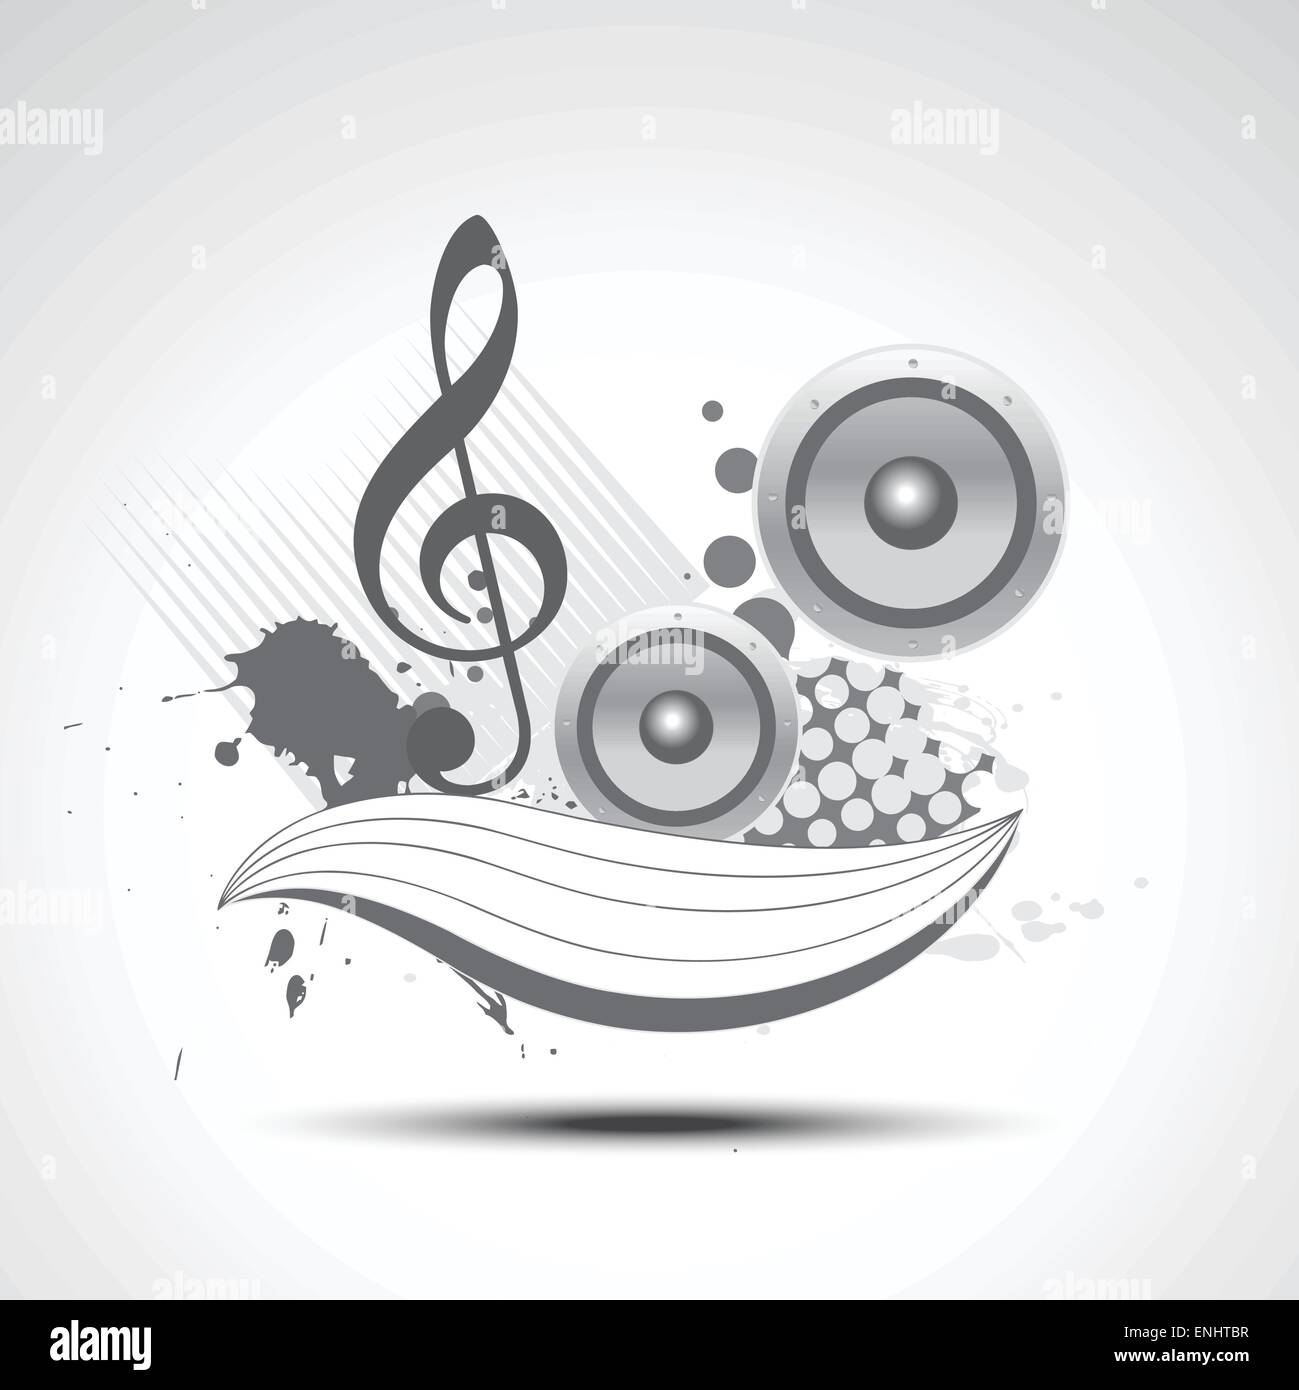 music vector art elements illustration design Stock Vector